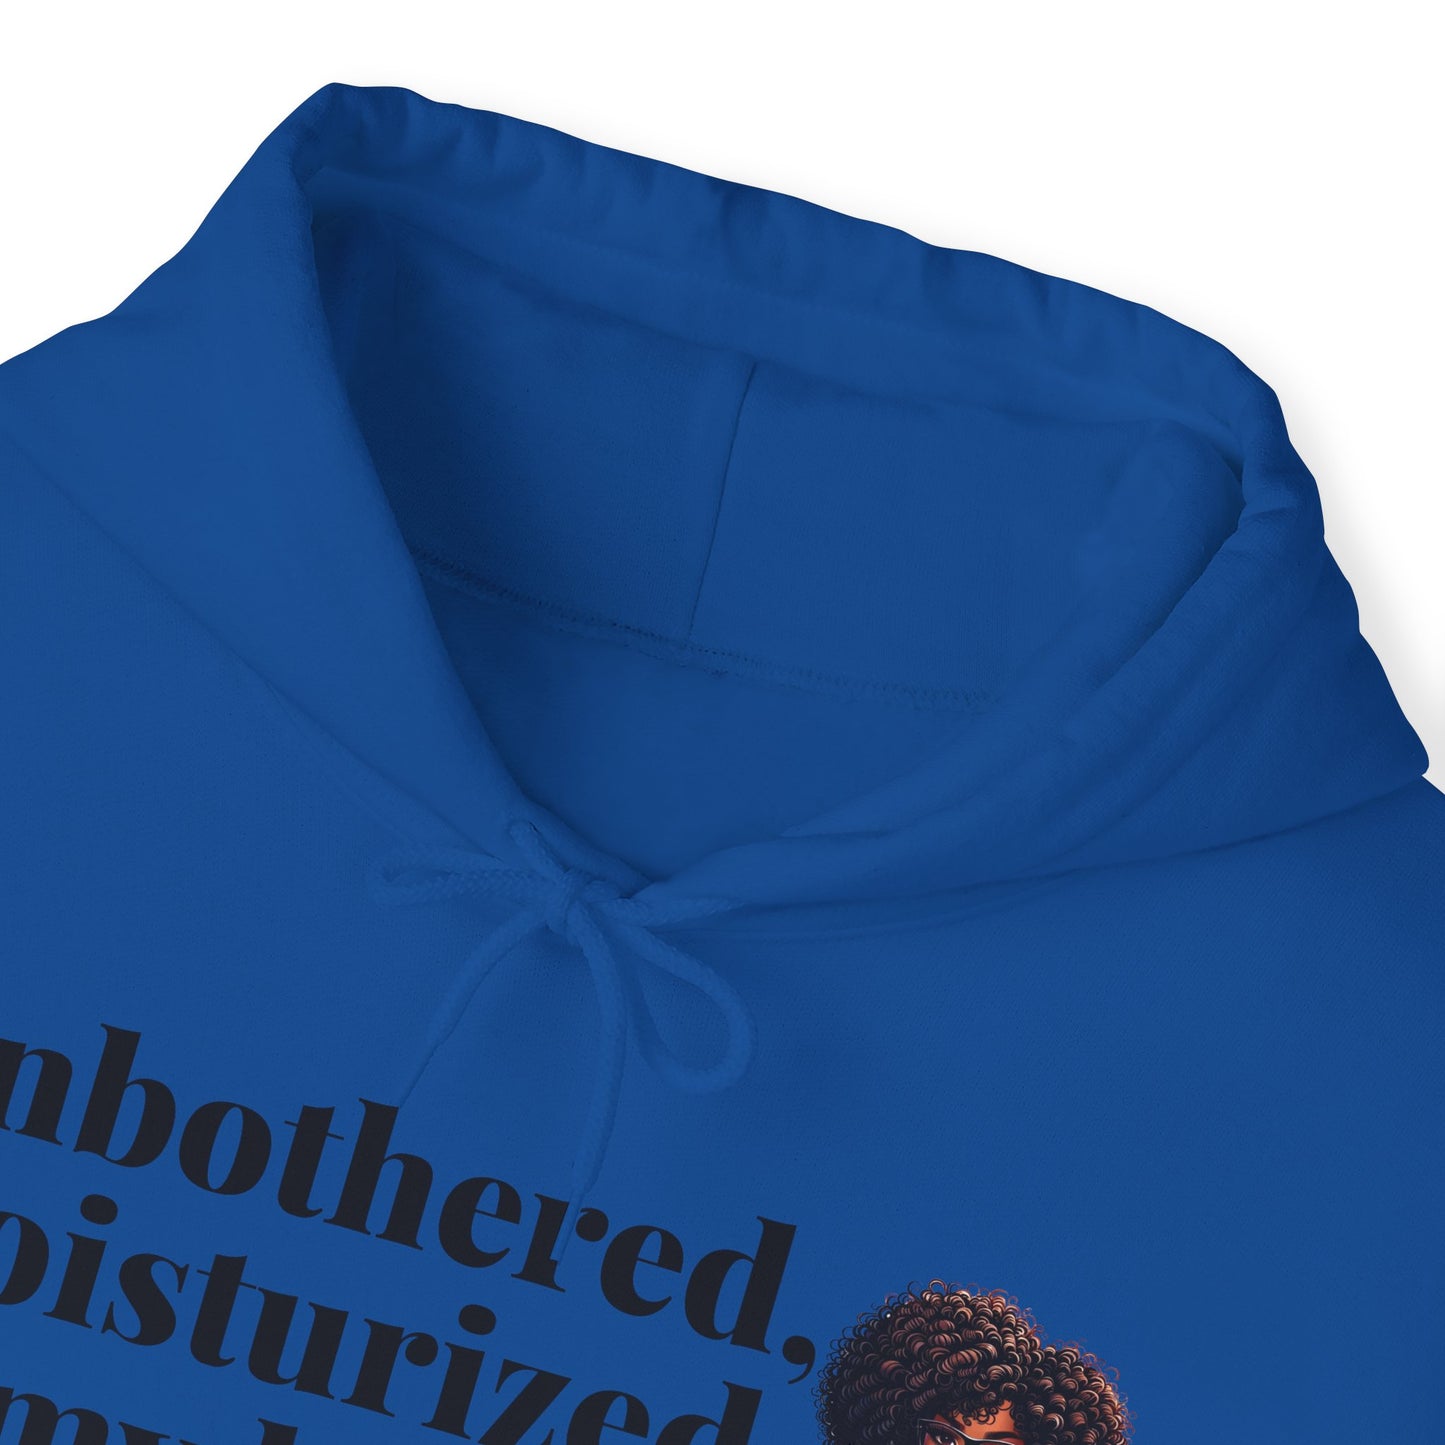 Unbothered & Flourishing Hooded Sweatshirt